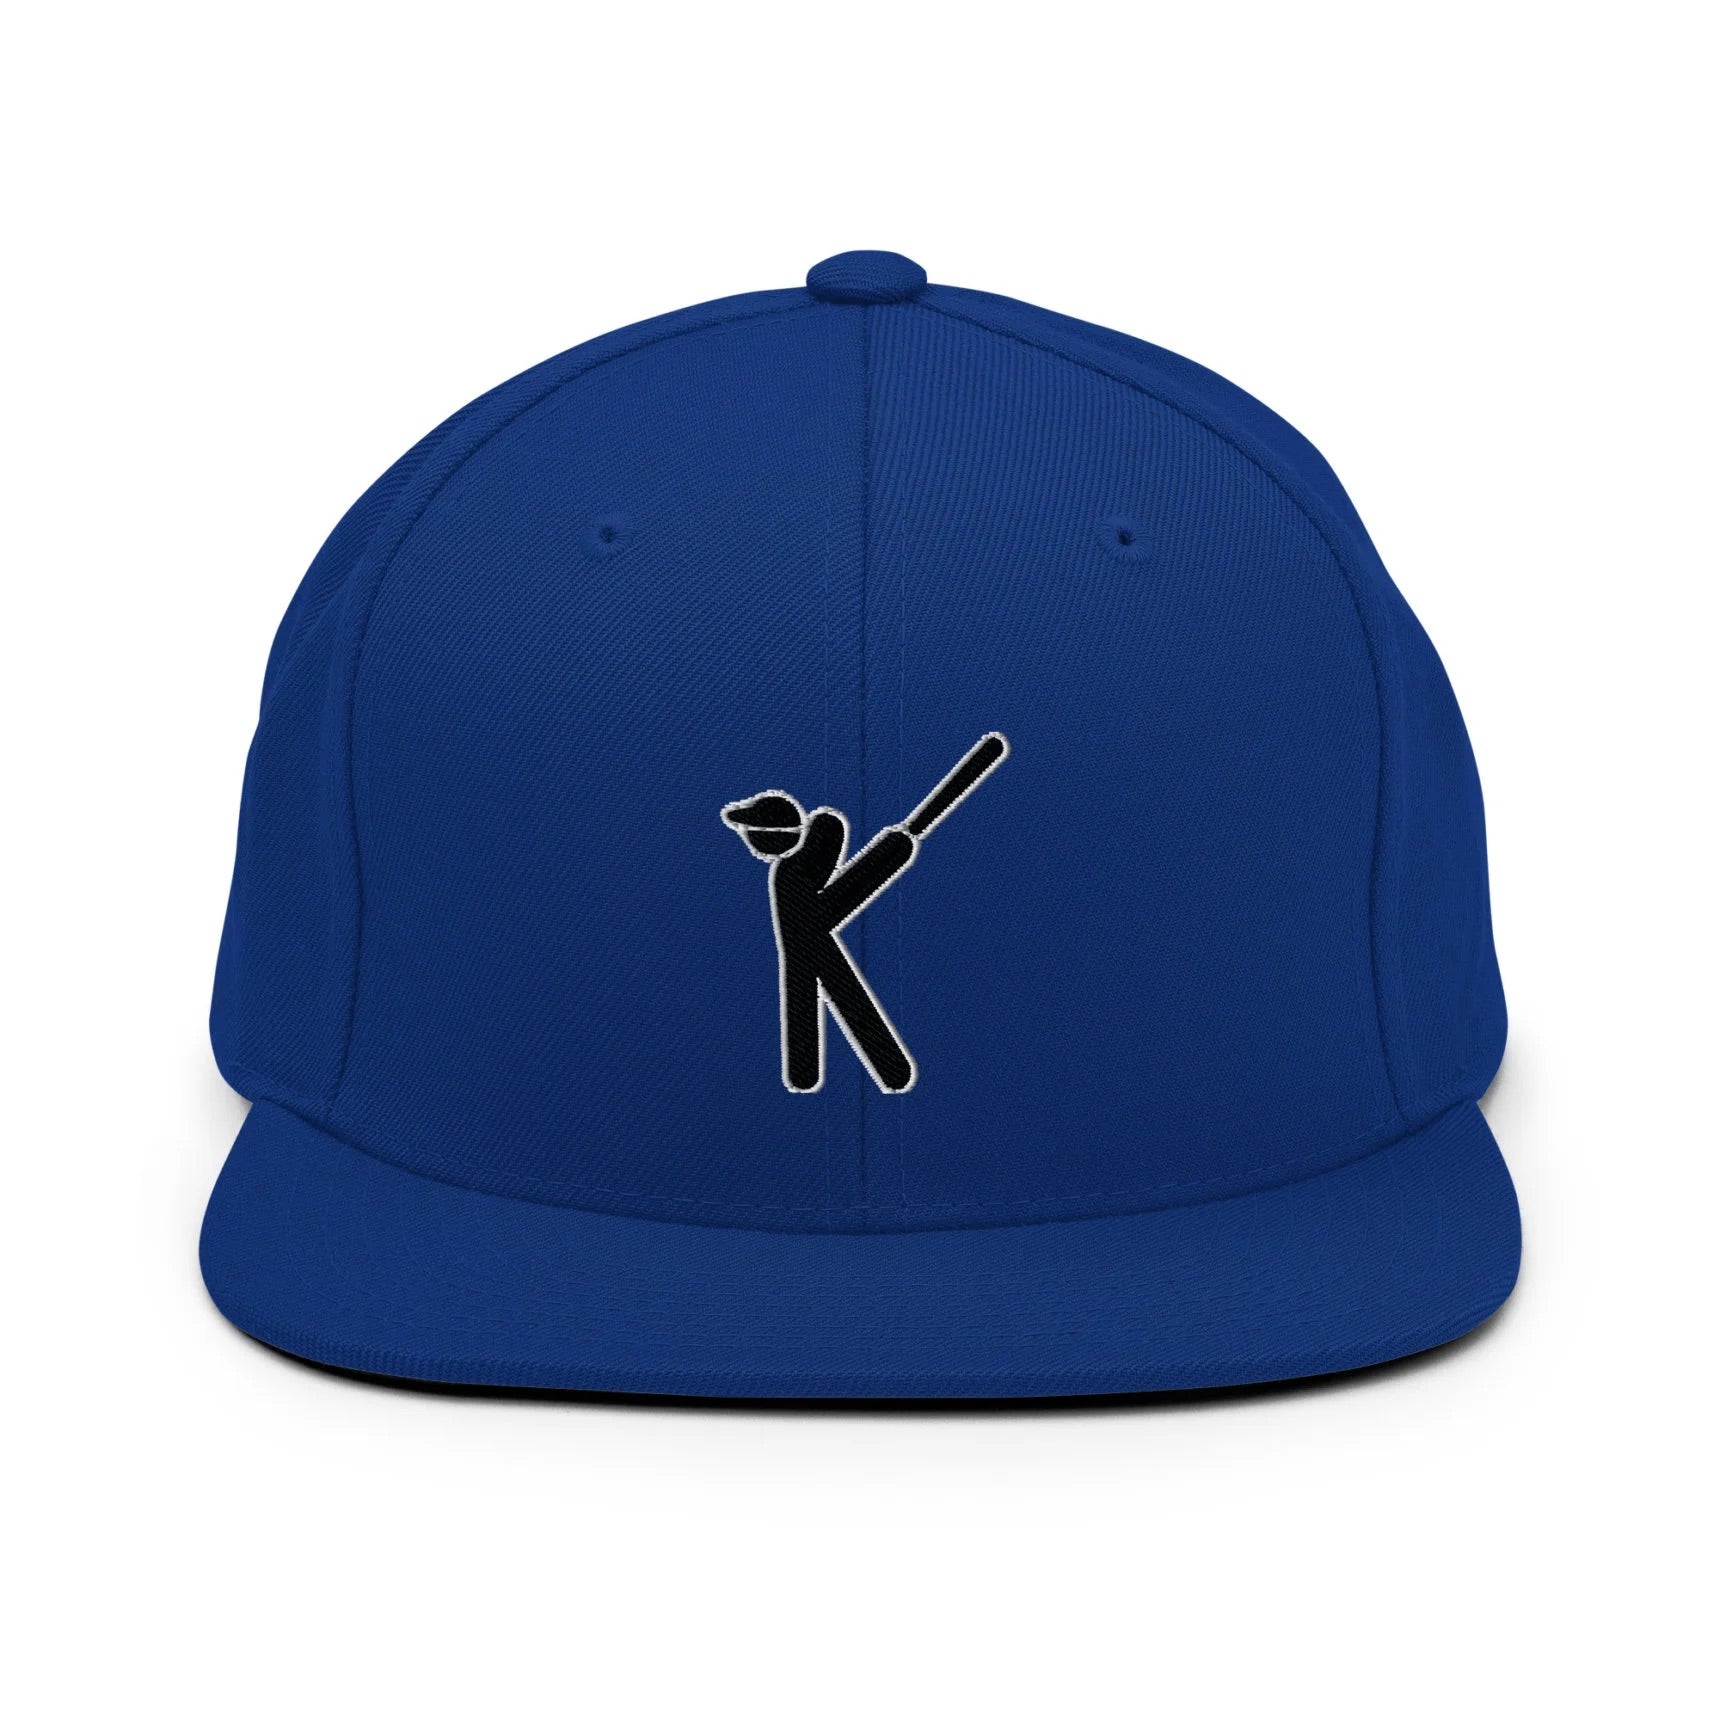 Kasabe ShowZone snapback hat in royal blue